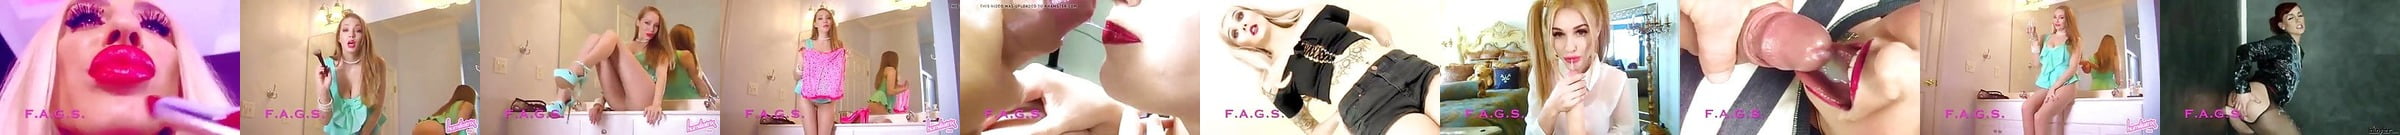 Featured Faggot Gay Porn Videos 4 Xhamster